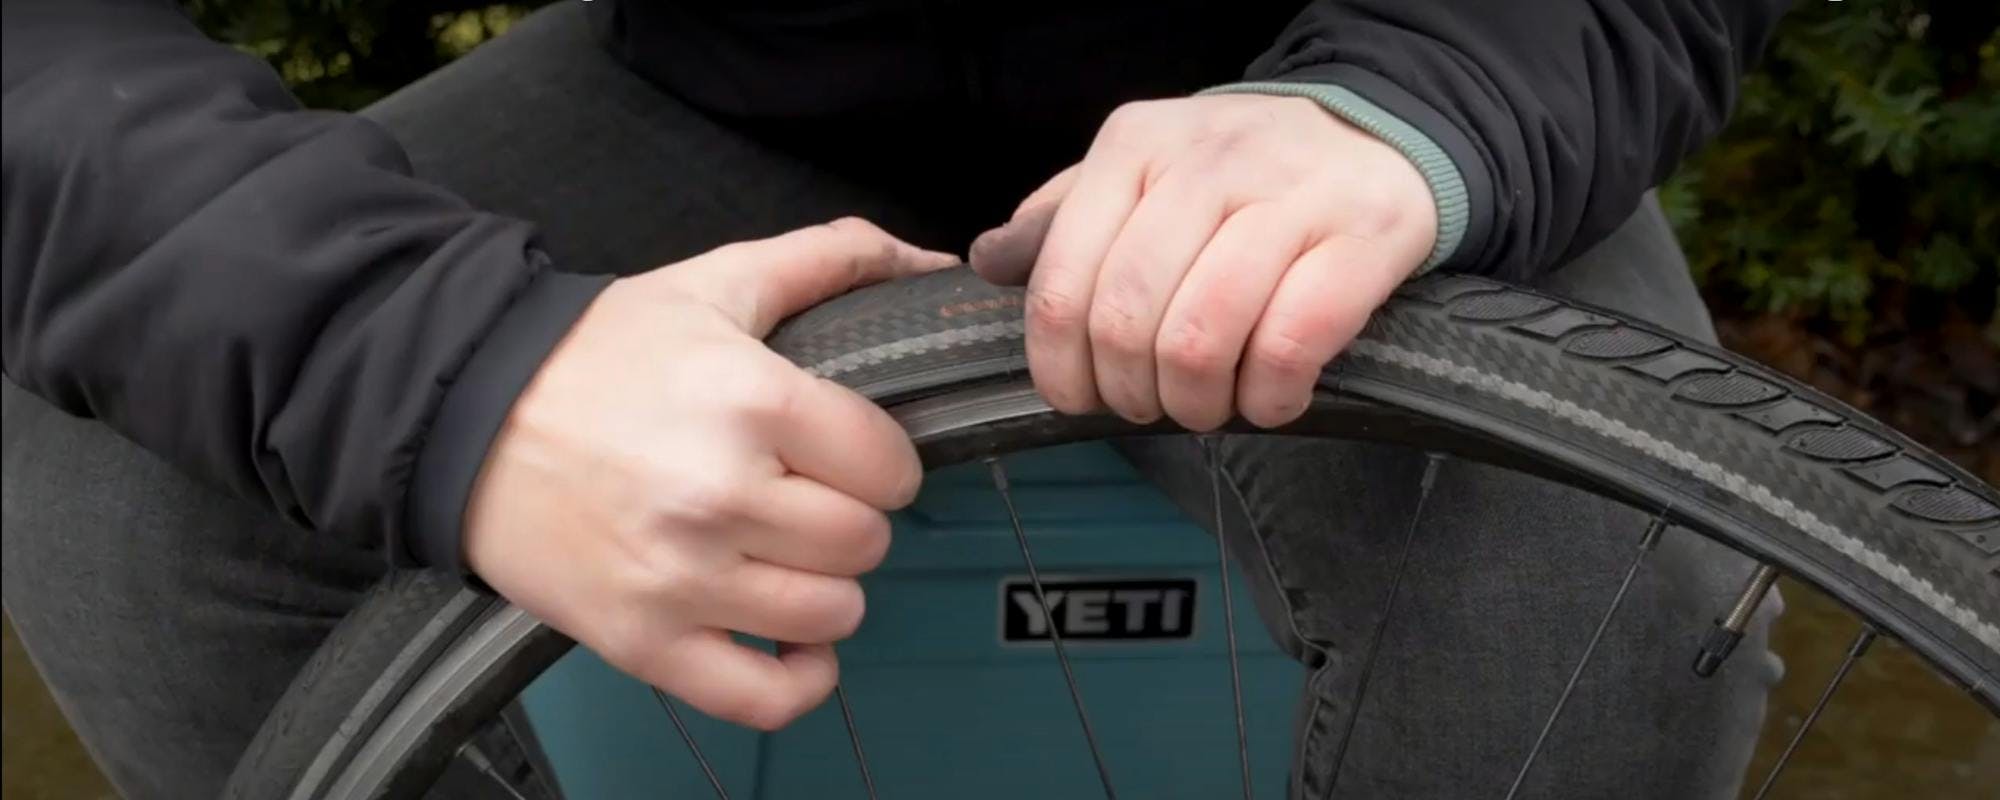 How to fix a flat bike tire